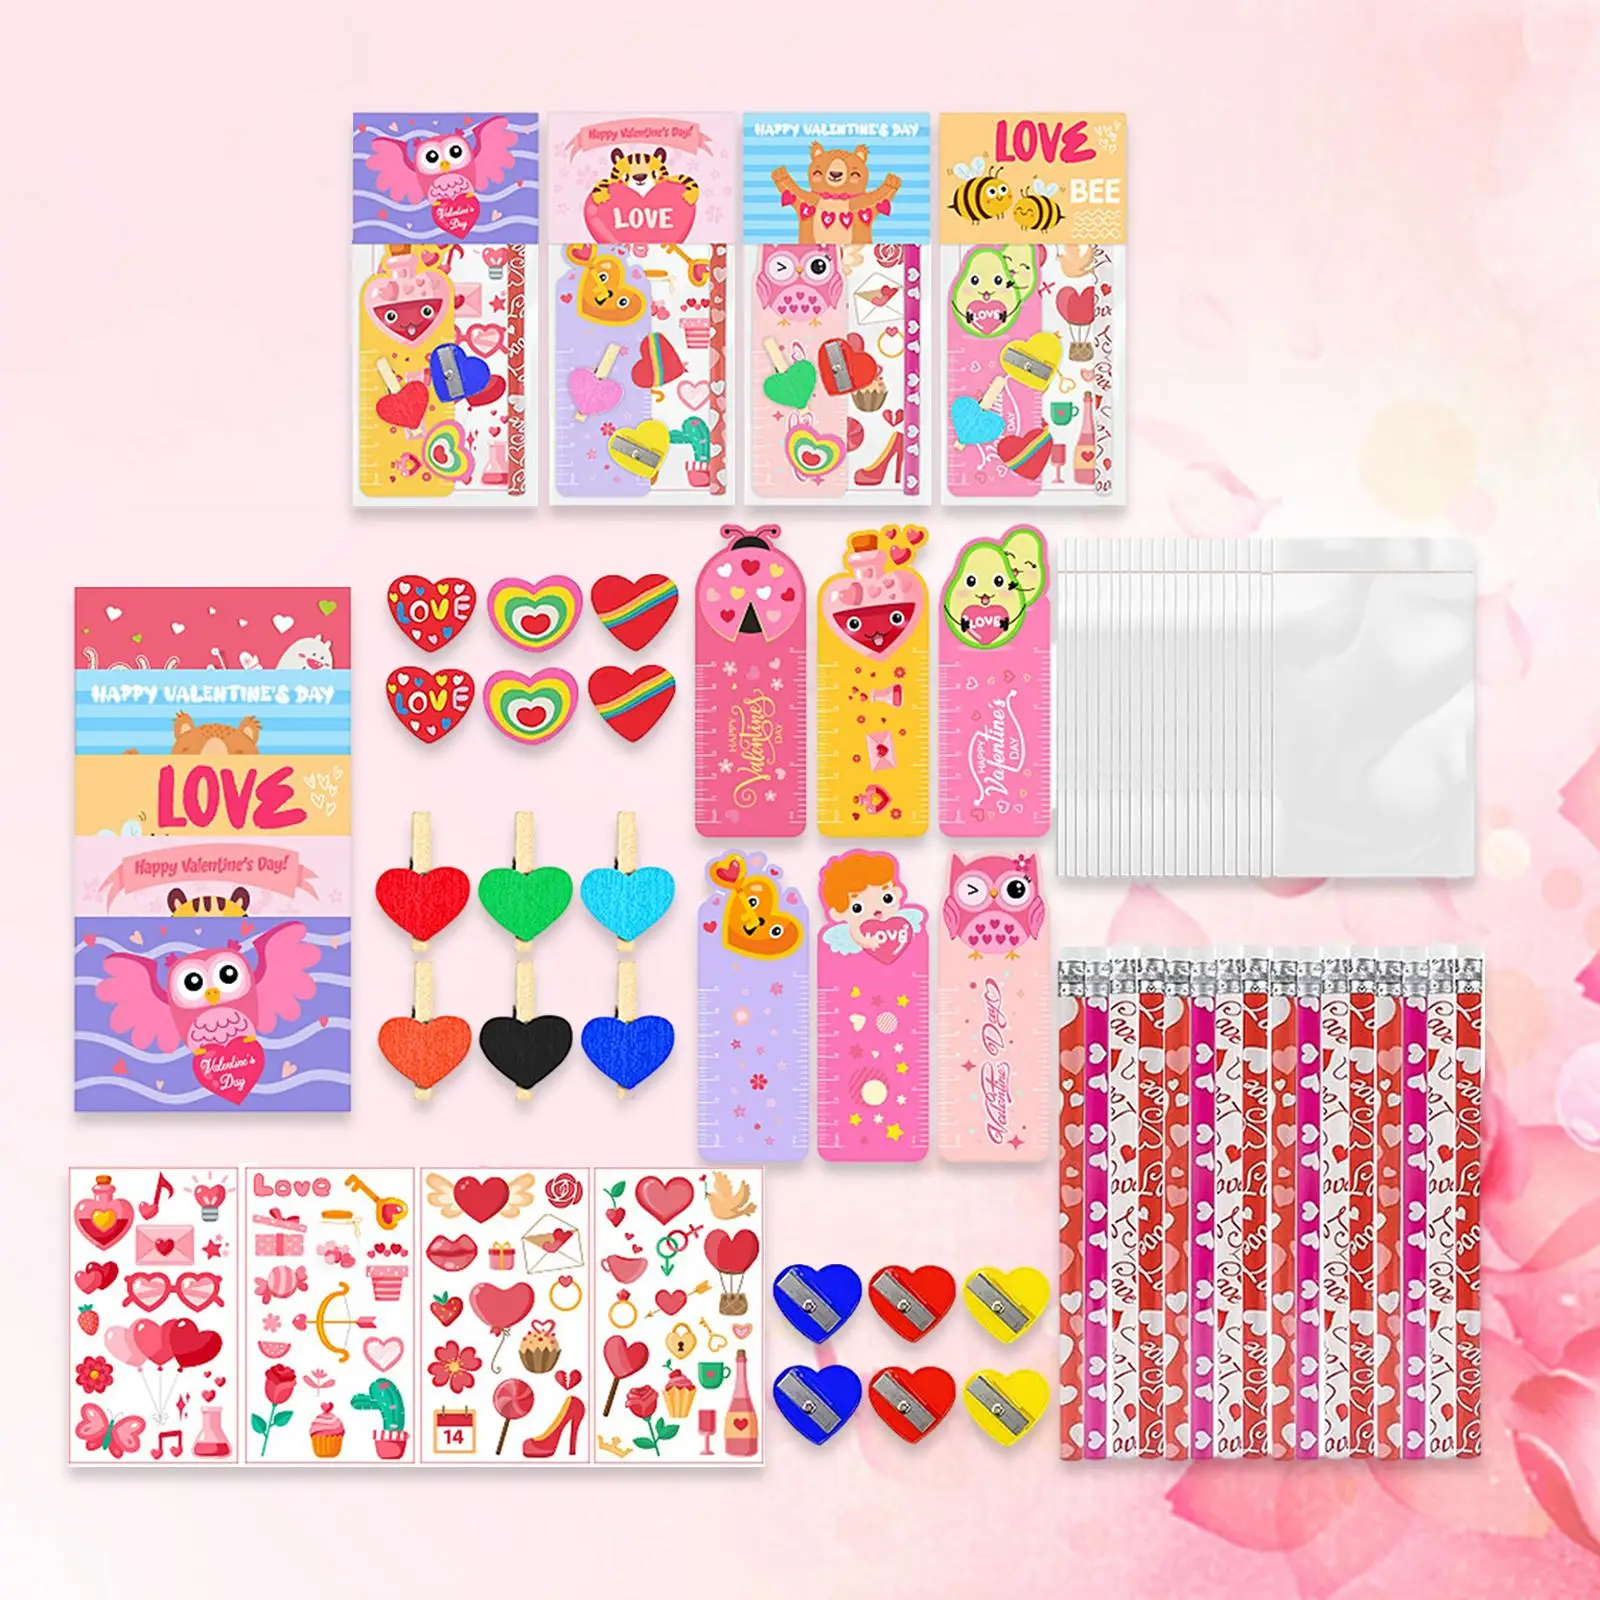 Assorted Valentines Stationery Set Valentine`s Day Party Favors Exchange Gift Supplies for Girls Friend Children Student Teacher